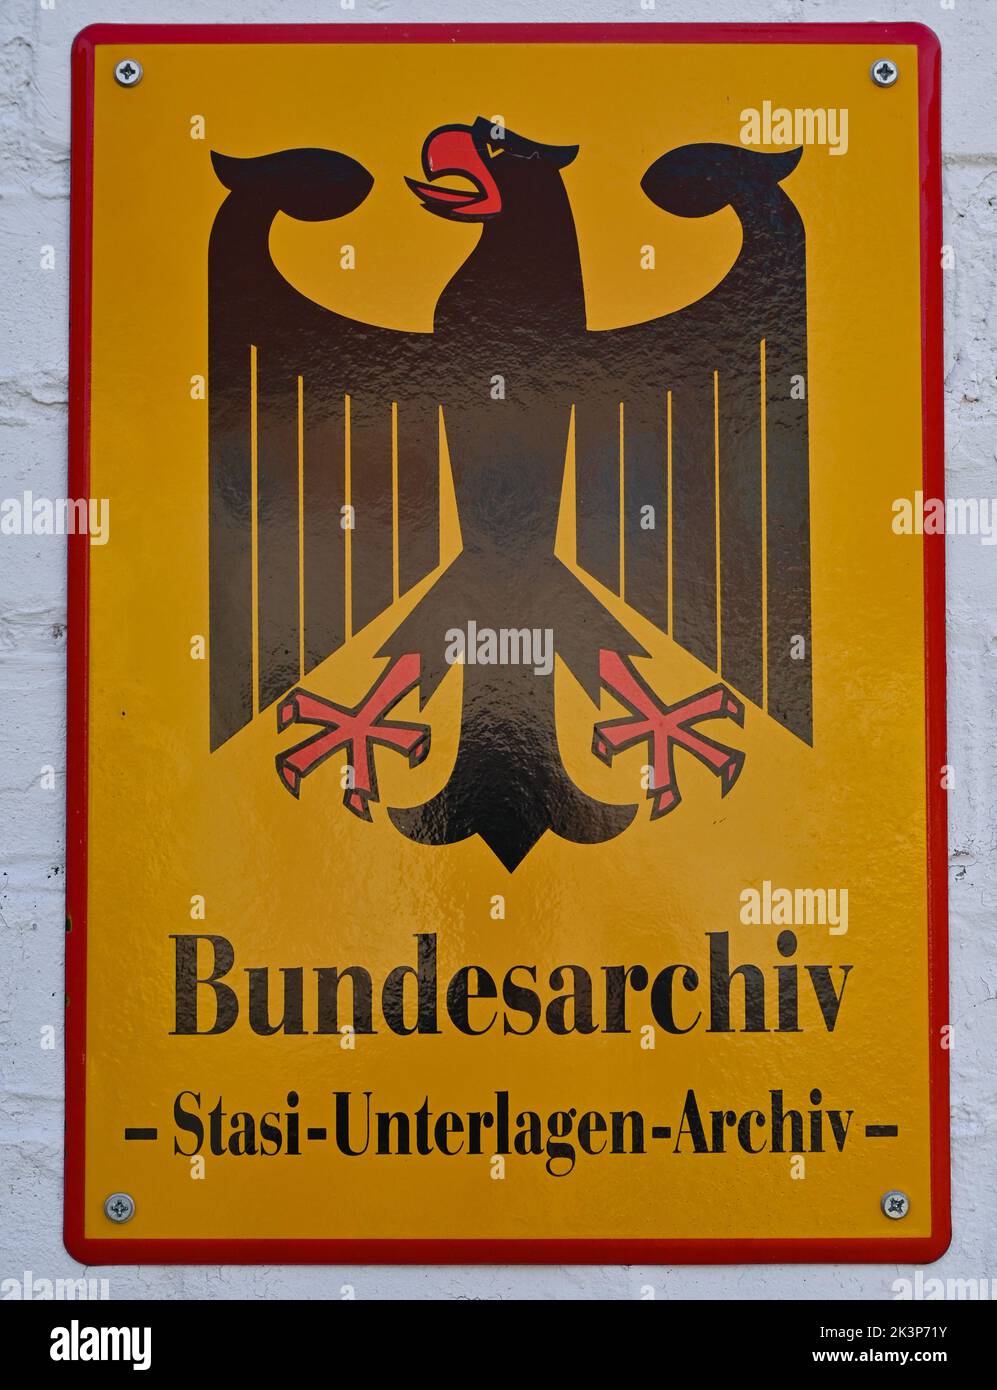 Aufkleber, Der Kampf geht weiter, Die Linke SDS, Berlin, Deutschland Sticker,  The struggle continues, Stock Photo, Picture And Rights Managed Image. Pic.  ZON-3949875